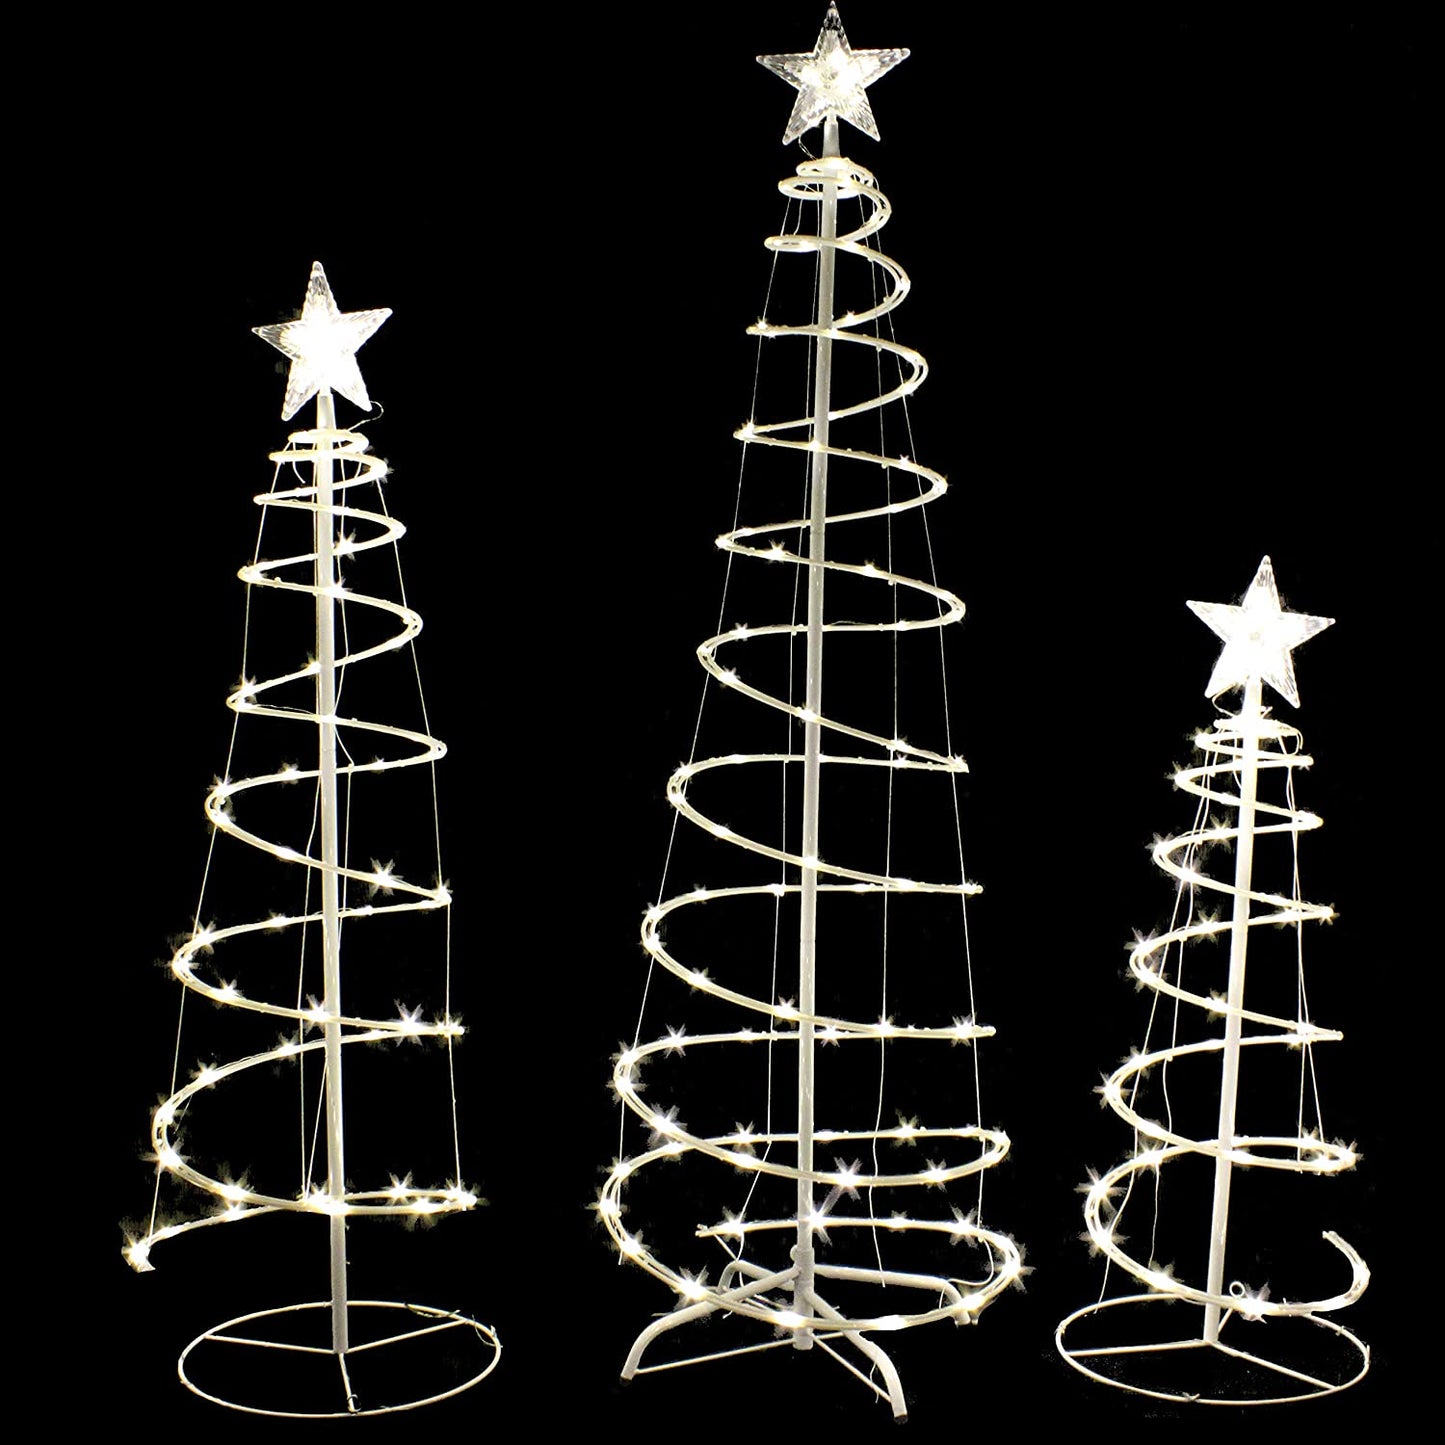 3 Packs Lighted Spiral Christmas Tree Set